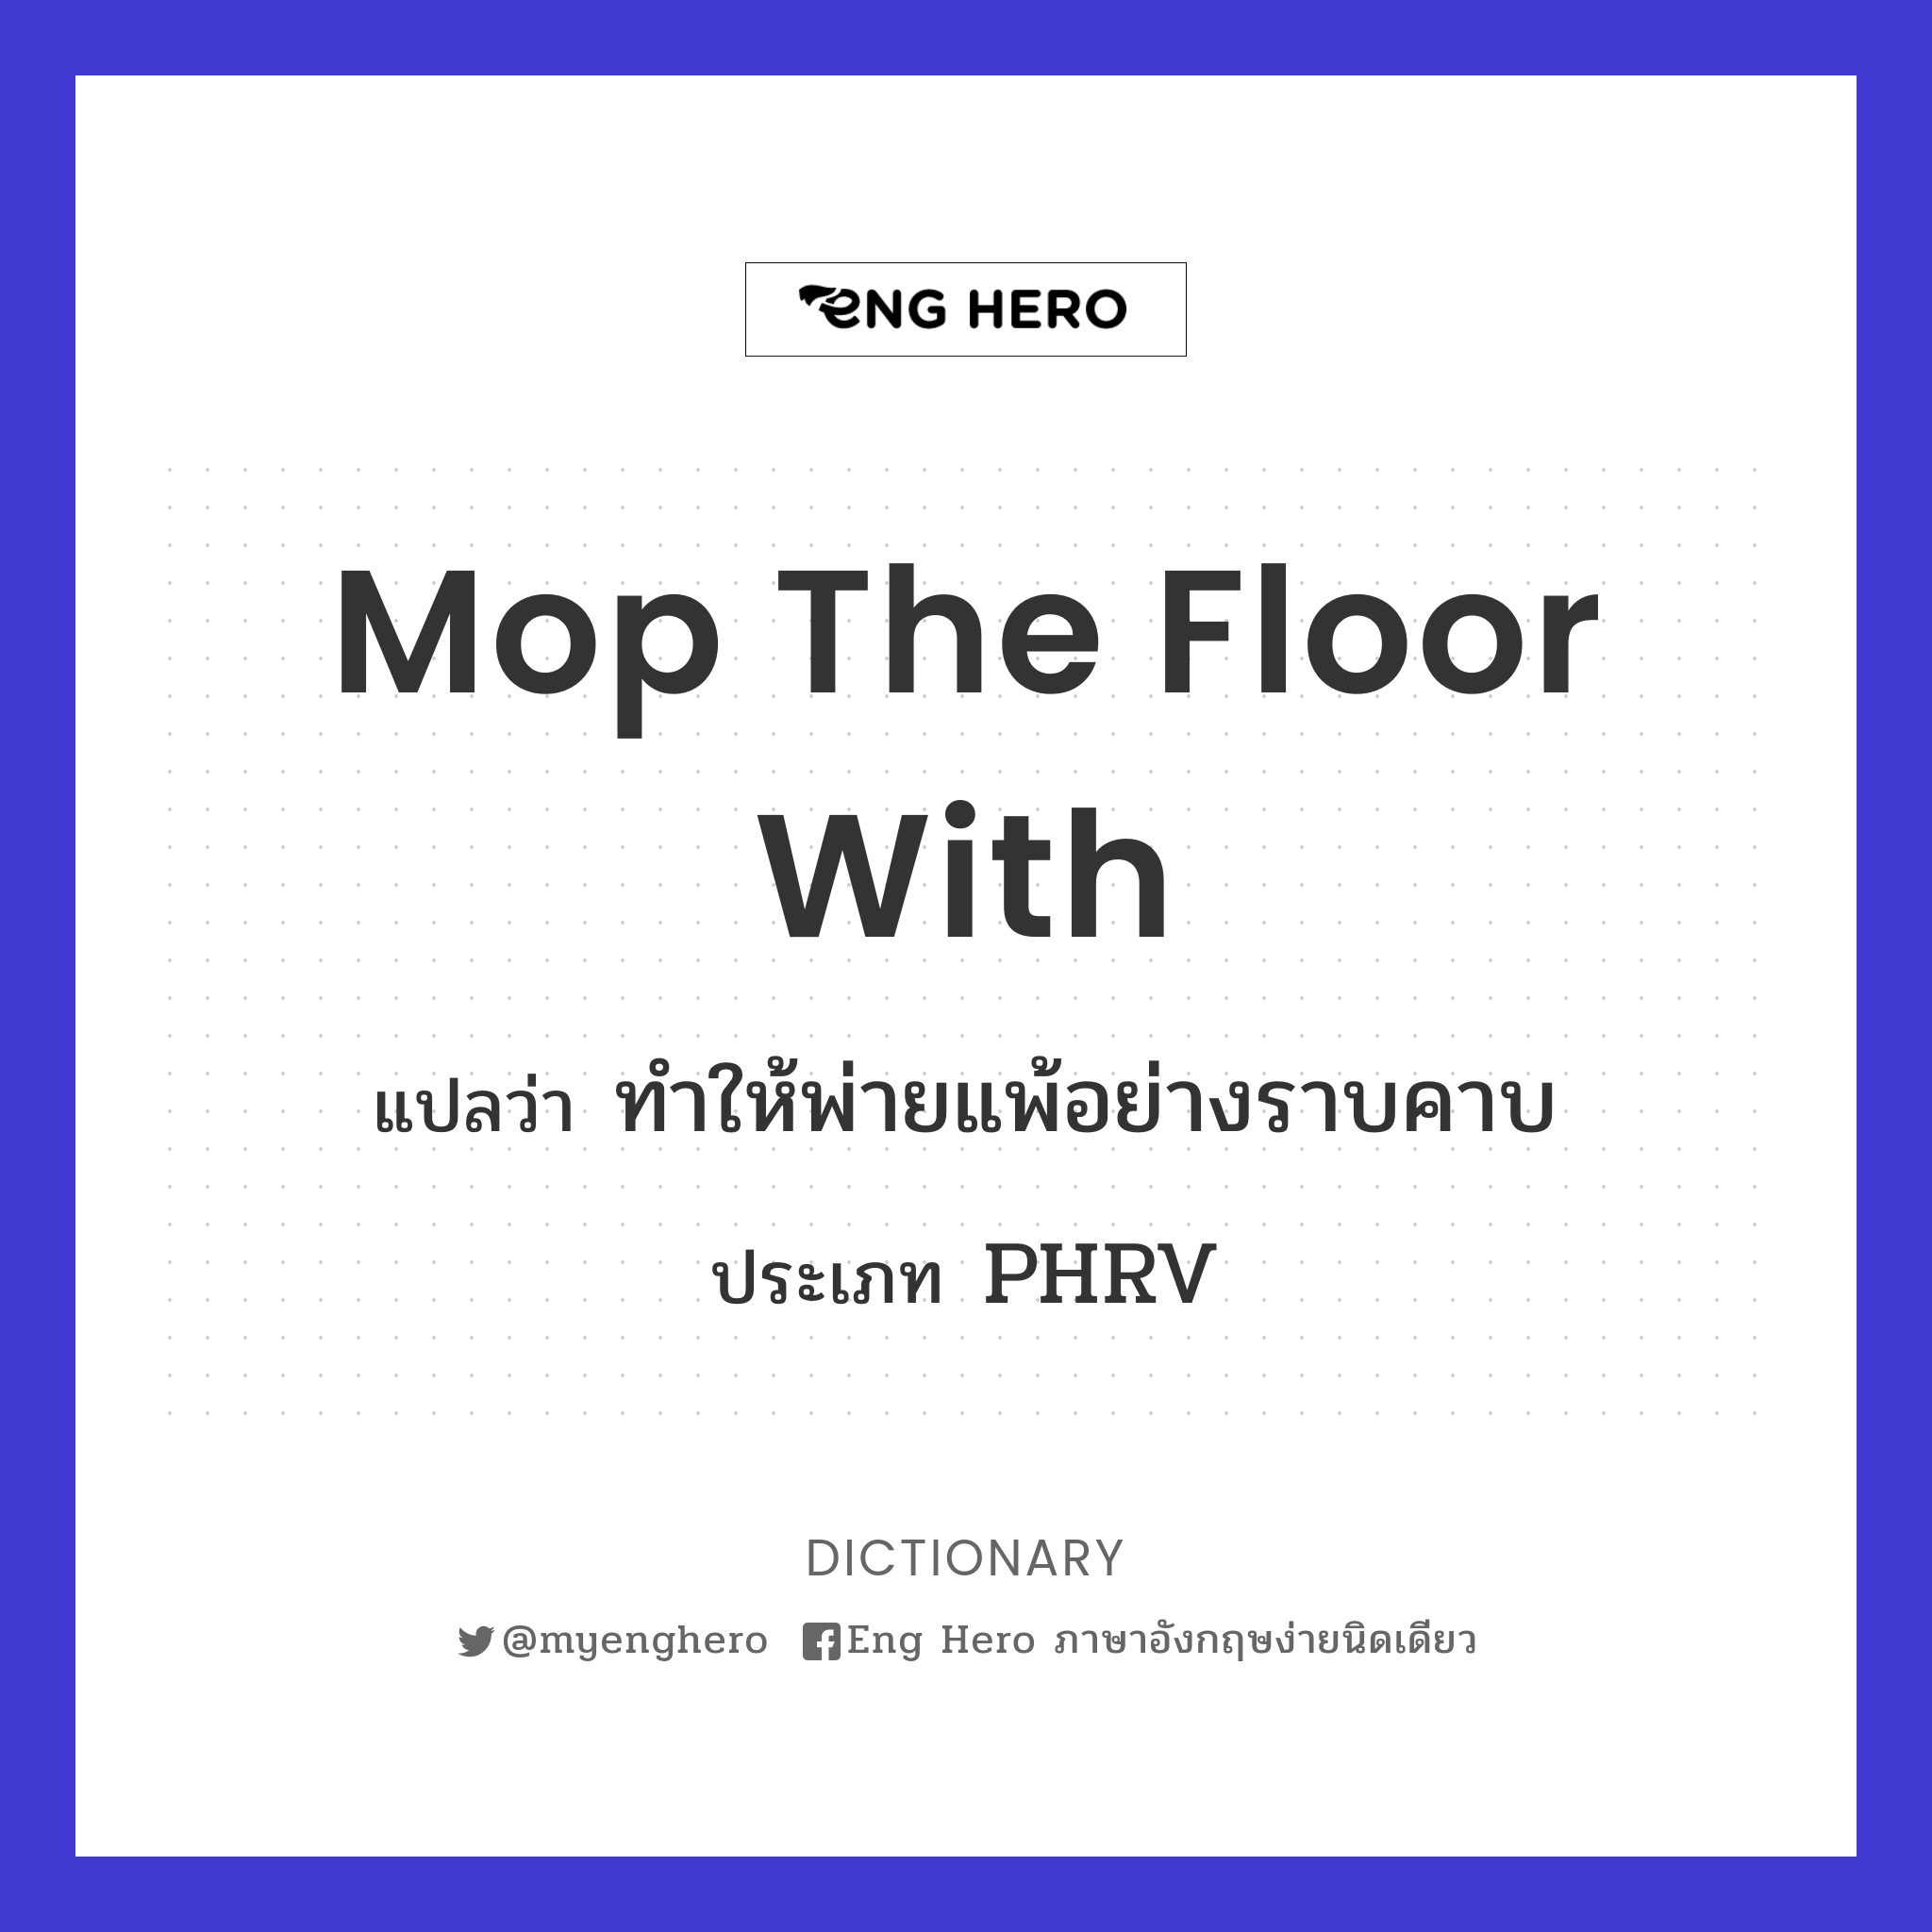 mop the floor with